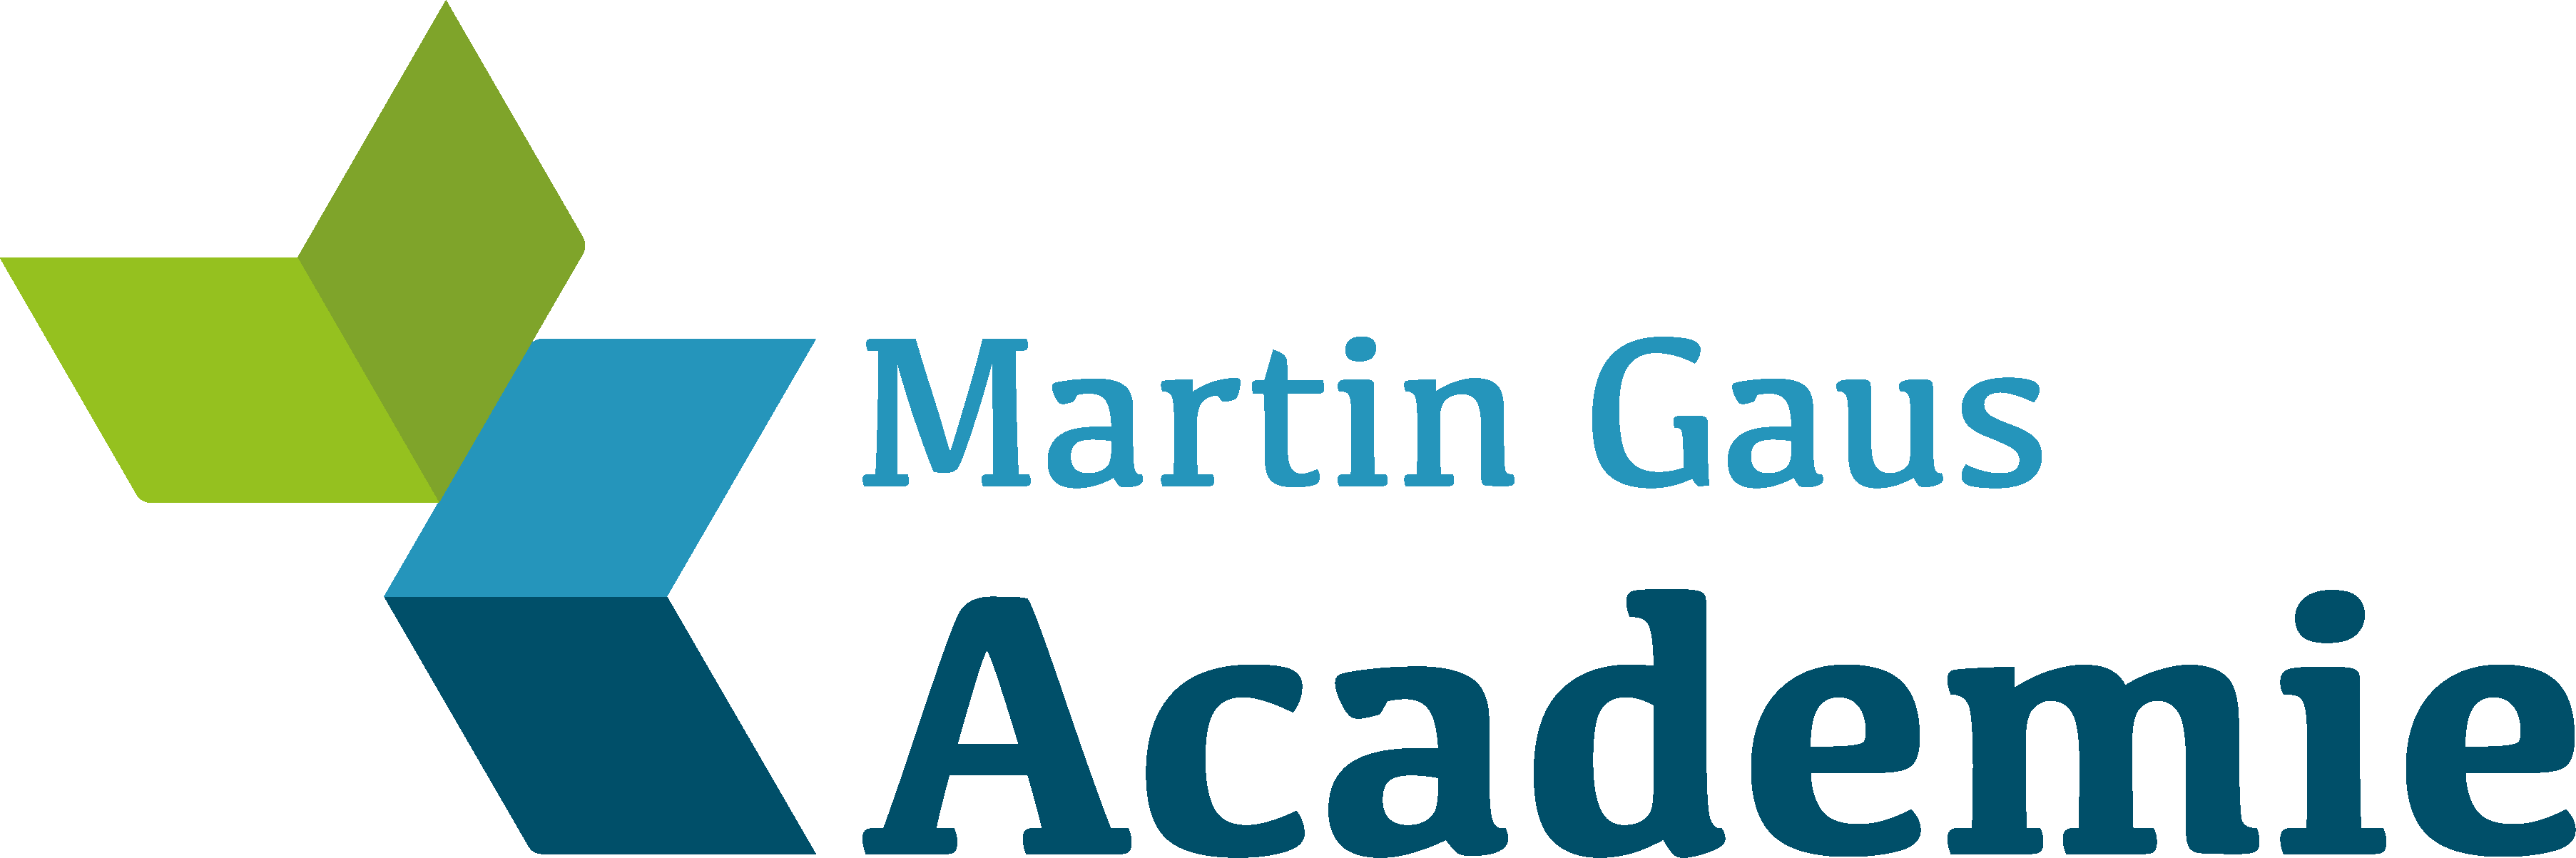 logo-martin-gaus-academie.png